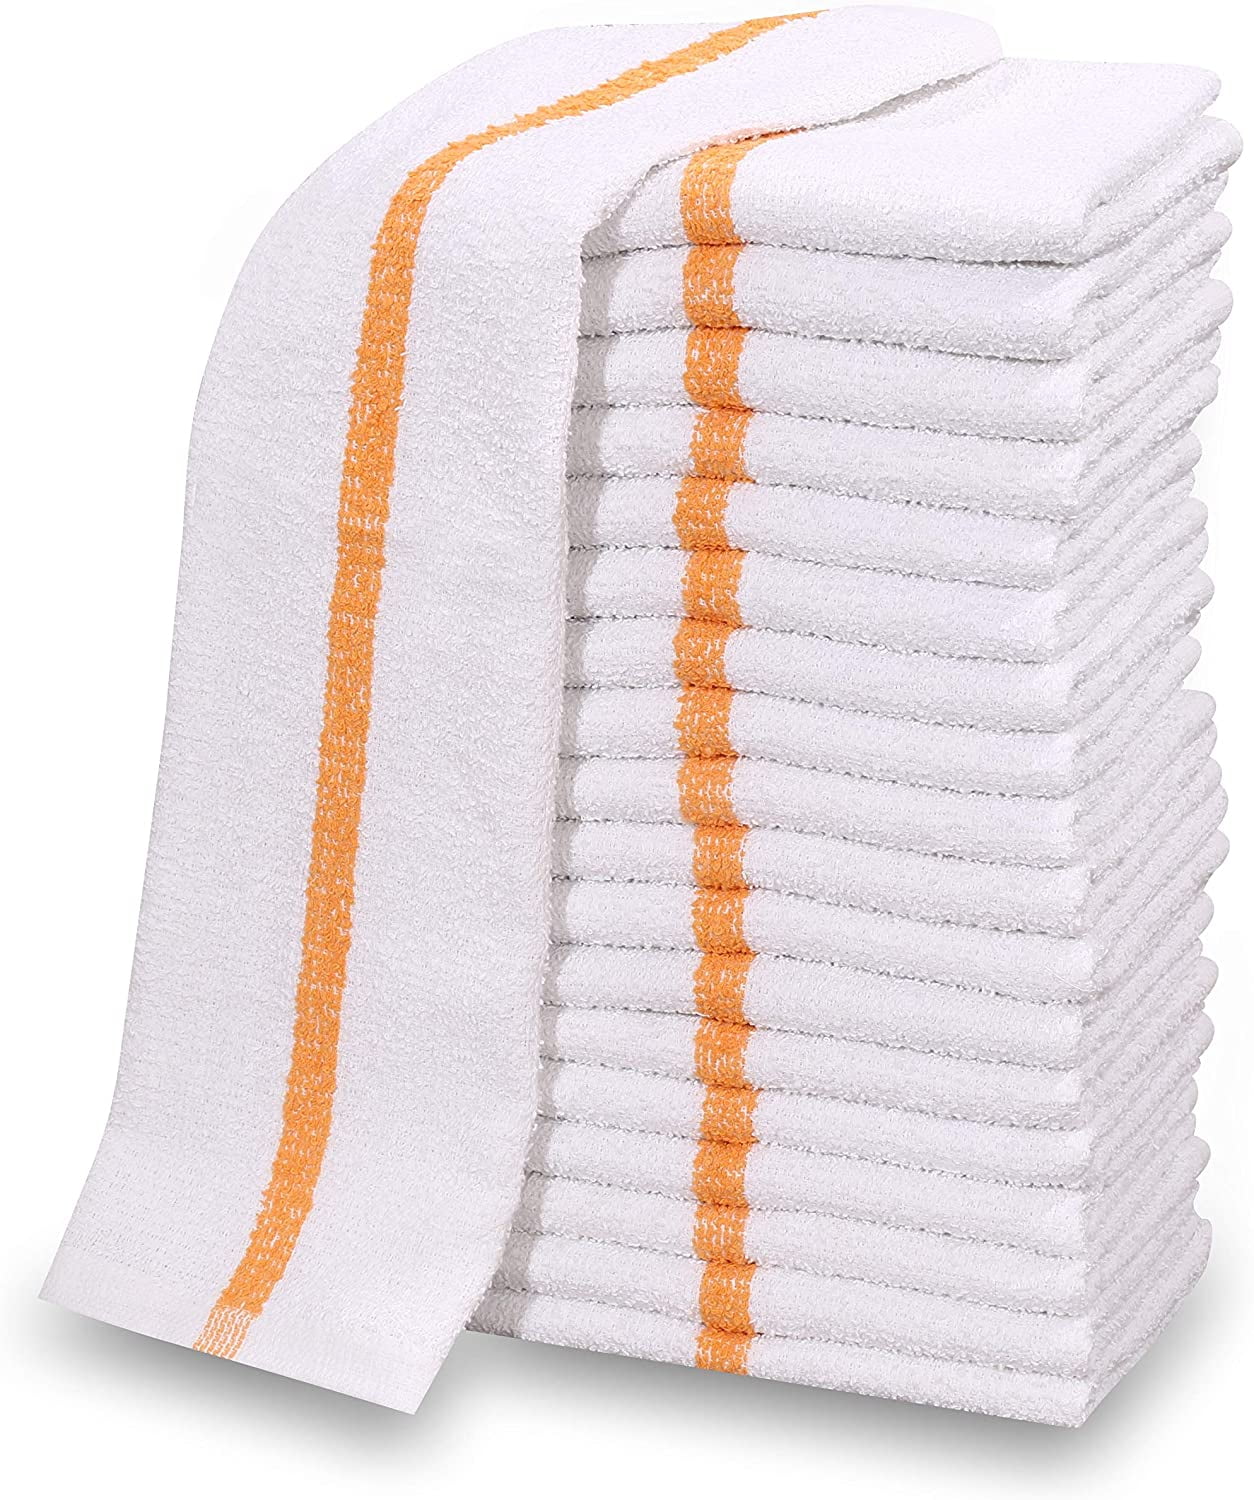 BAR Towels/crodino, Bar Towel, Advertising Towels, Man Cave Home